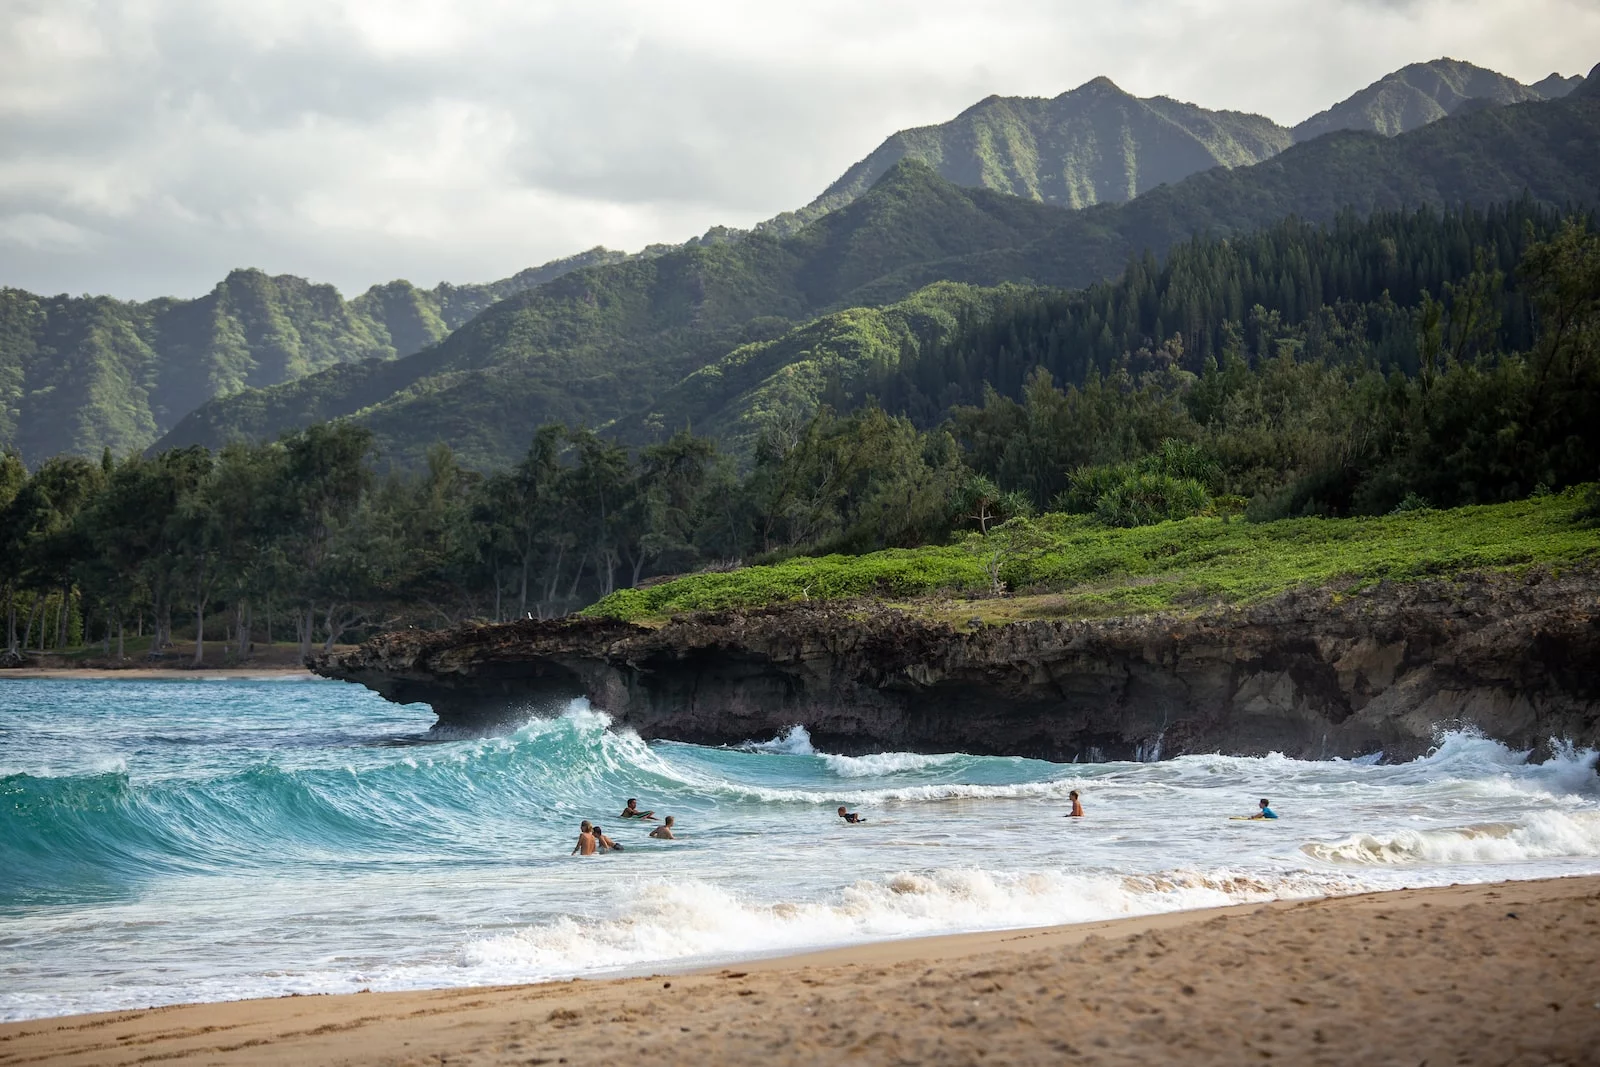 Homeowners Insurance in Hawaii